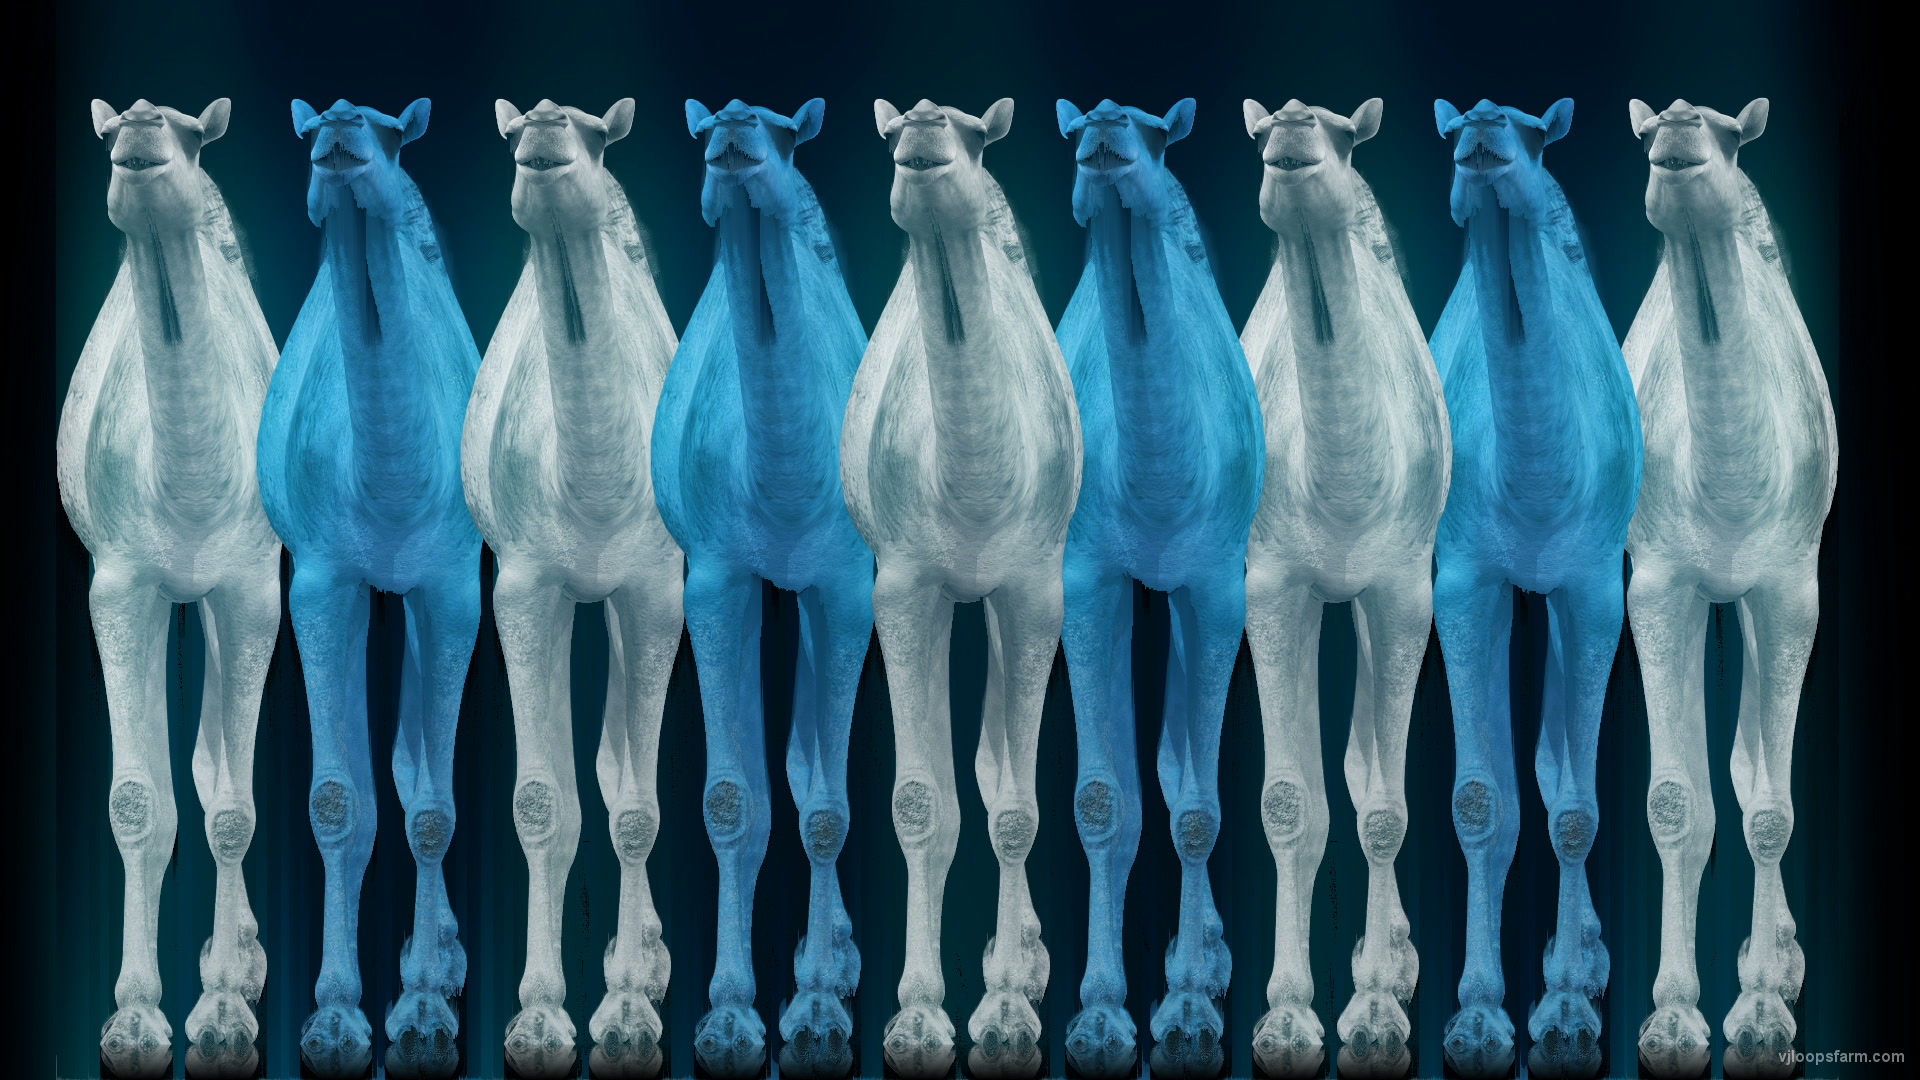 Camel Team Full Size 3D Blue Glow Animal Video Art VJ Loop